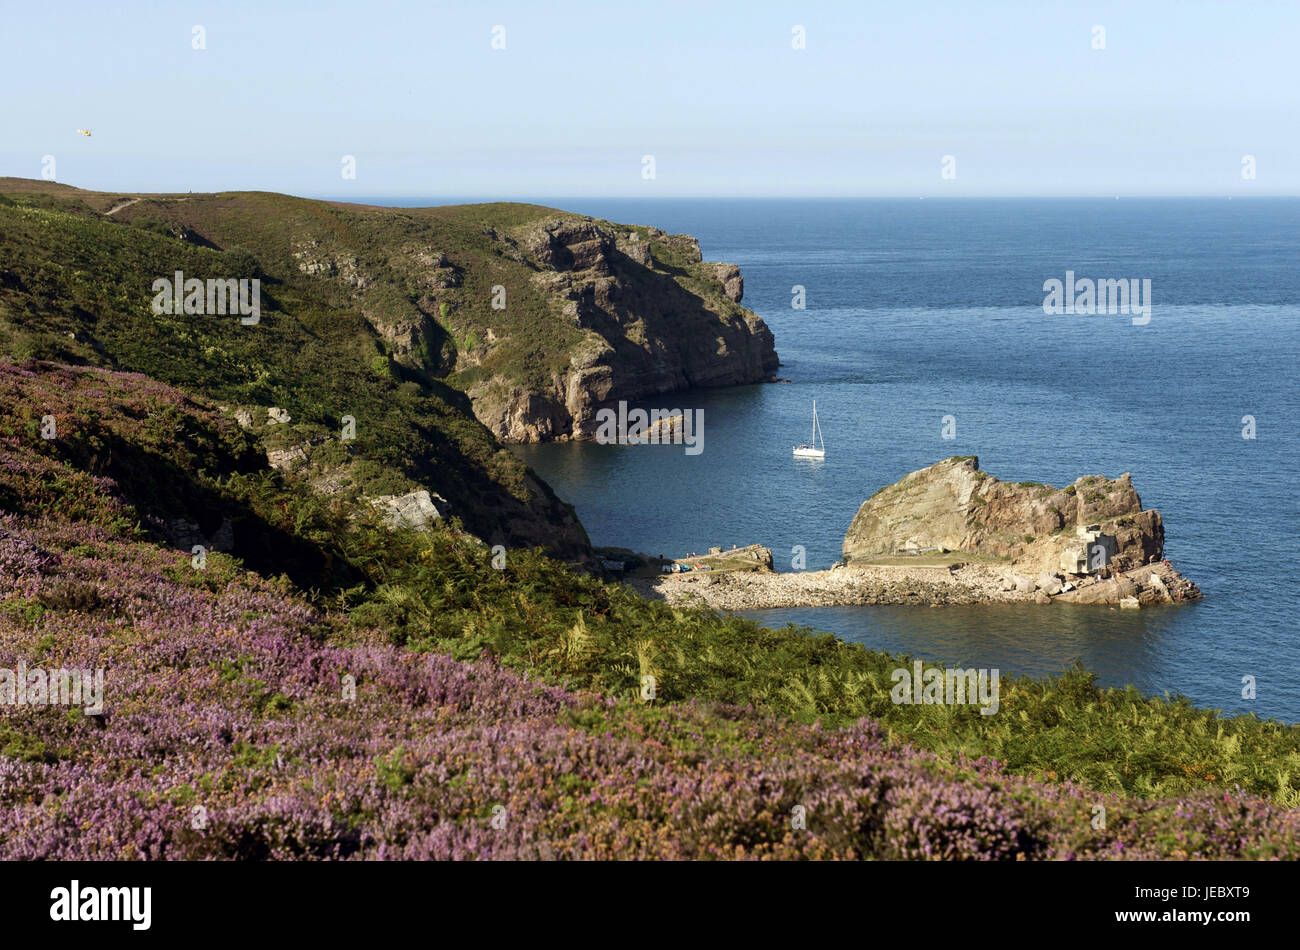 Europe, France, Brittany, Cote D' Emeraude, Cap Frehel, coastal scenery with sailboats, Stock Photo